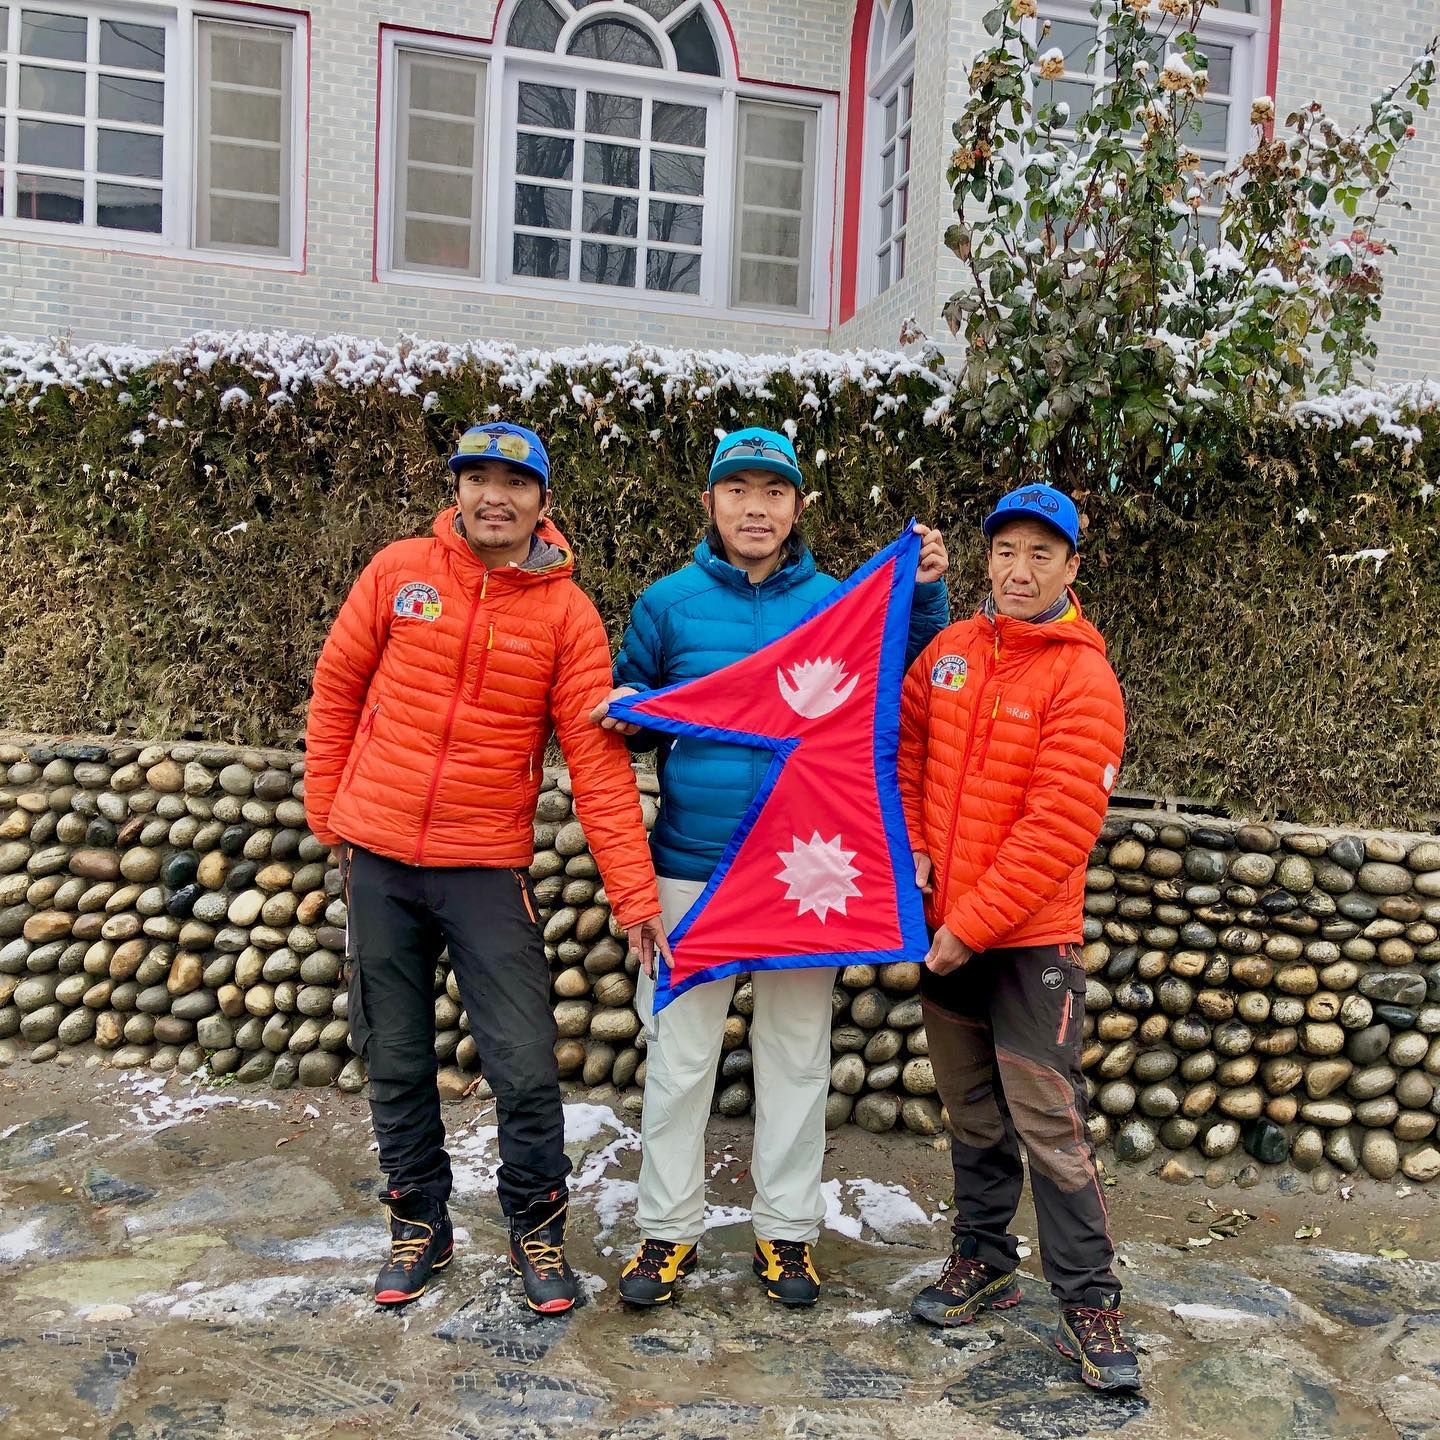 Мингма Галйе Шерпа (Mingma Gyalje Sherpa), Дава Тенцинг Шерпа (Dawa Tenzing Sherpa), Килу Пемба Шерпа (Kilu Pemba Sherpa) 